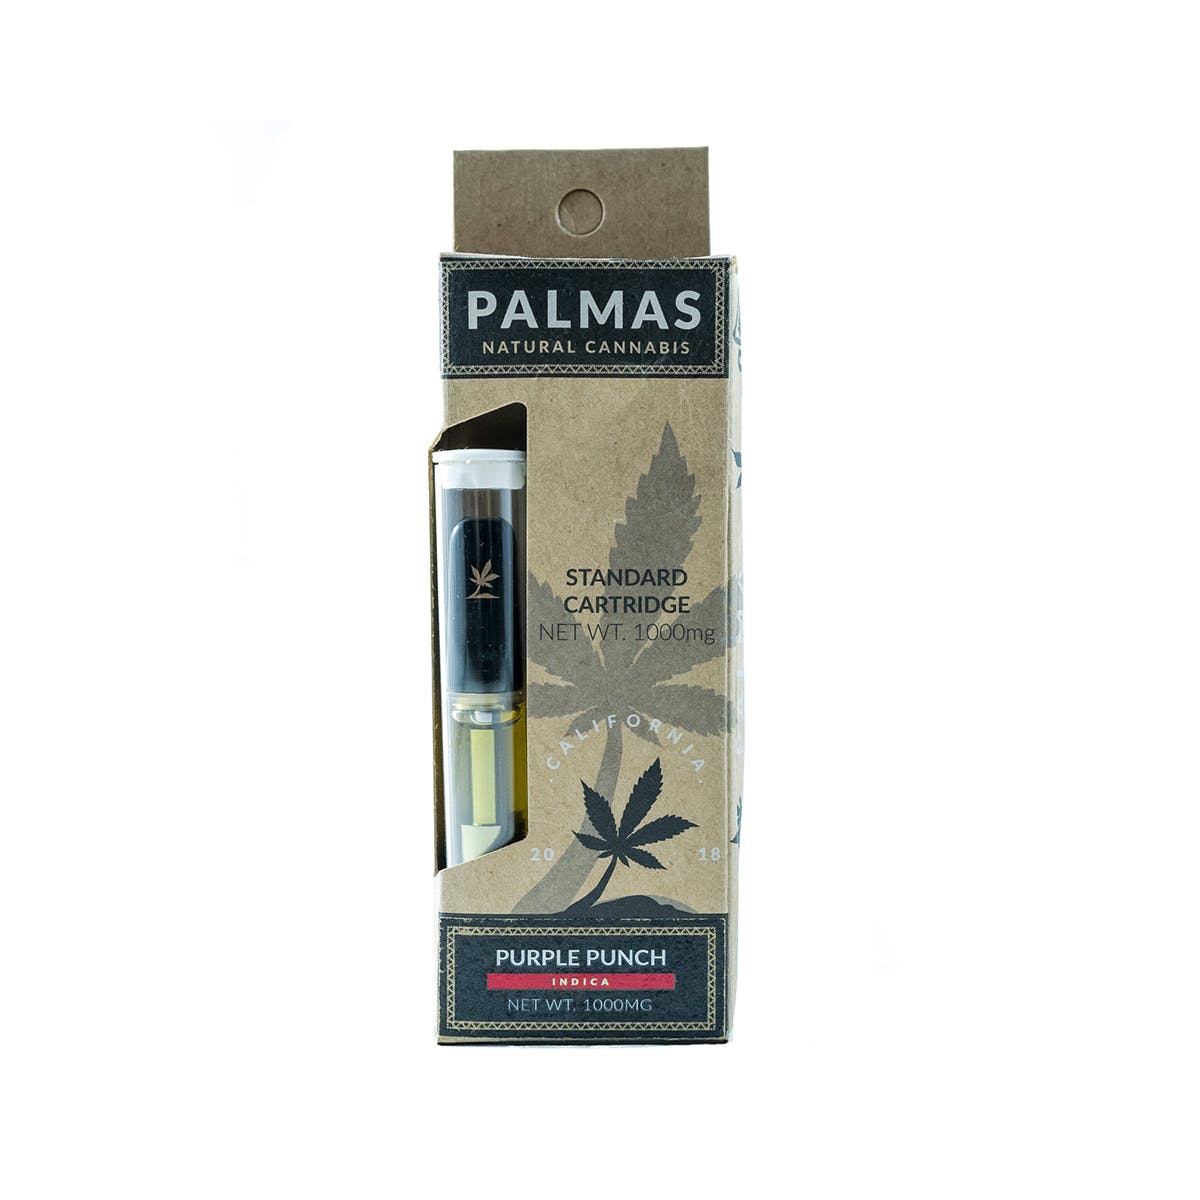 marijuana-dispensaries-straight-up-20-in-compton-palmas-standard-cartridge-purple-punch